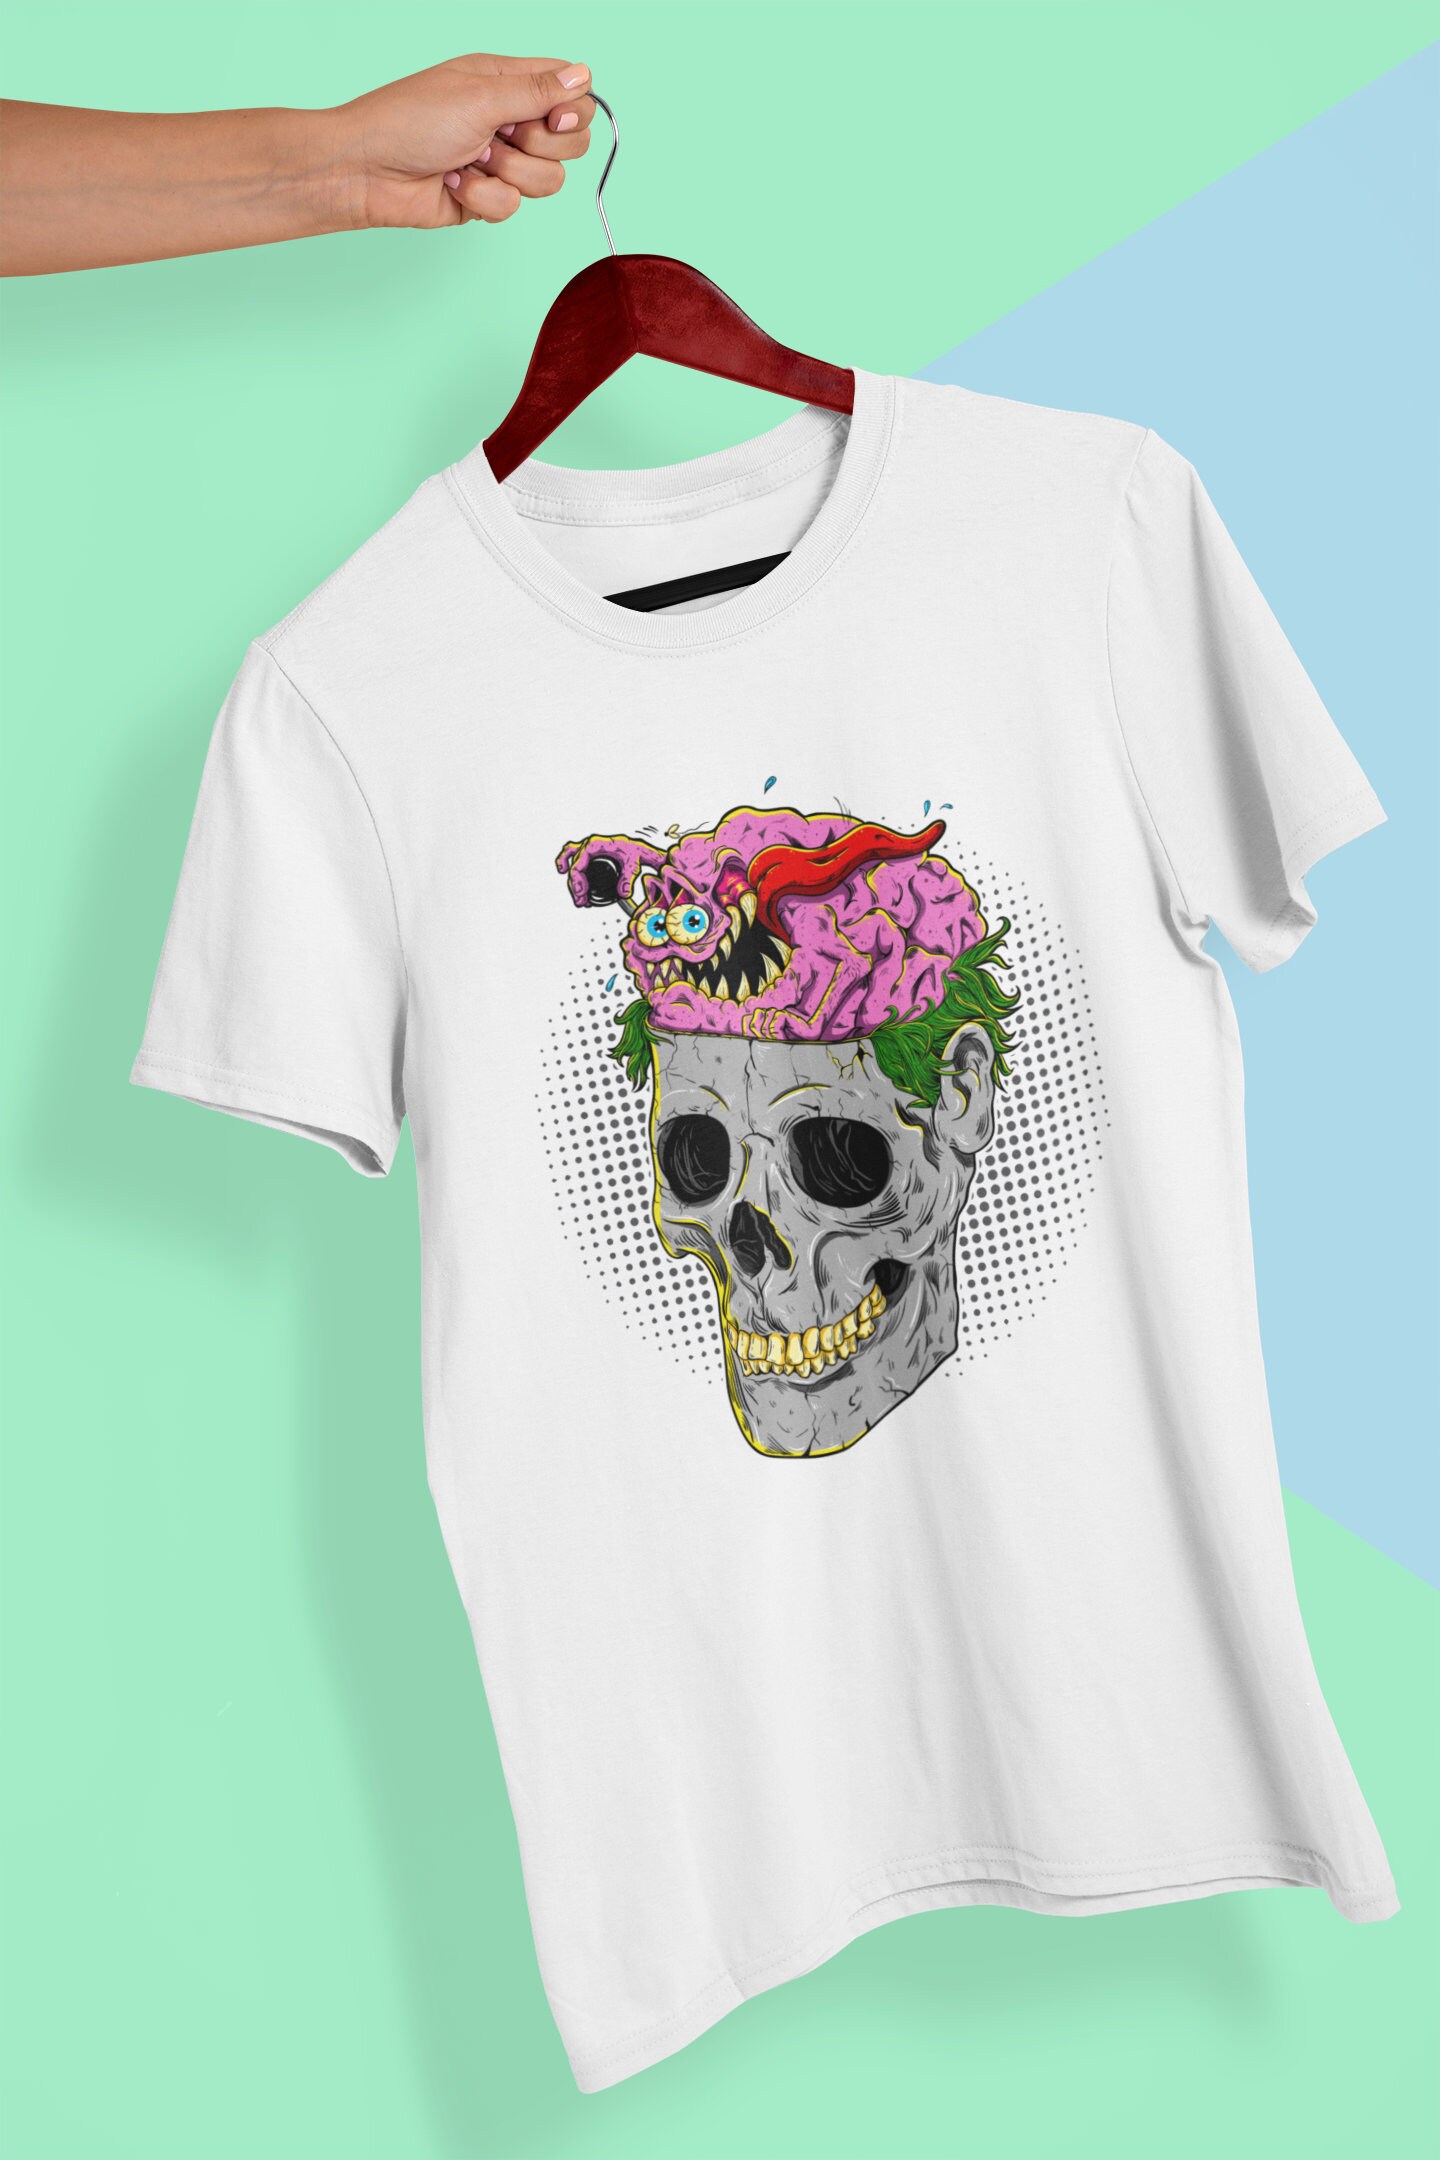 Crazy Brain Skull Skeleton Funny T-shirt Unisex Funny Basic T | Etsy